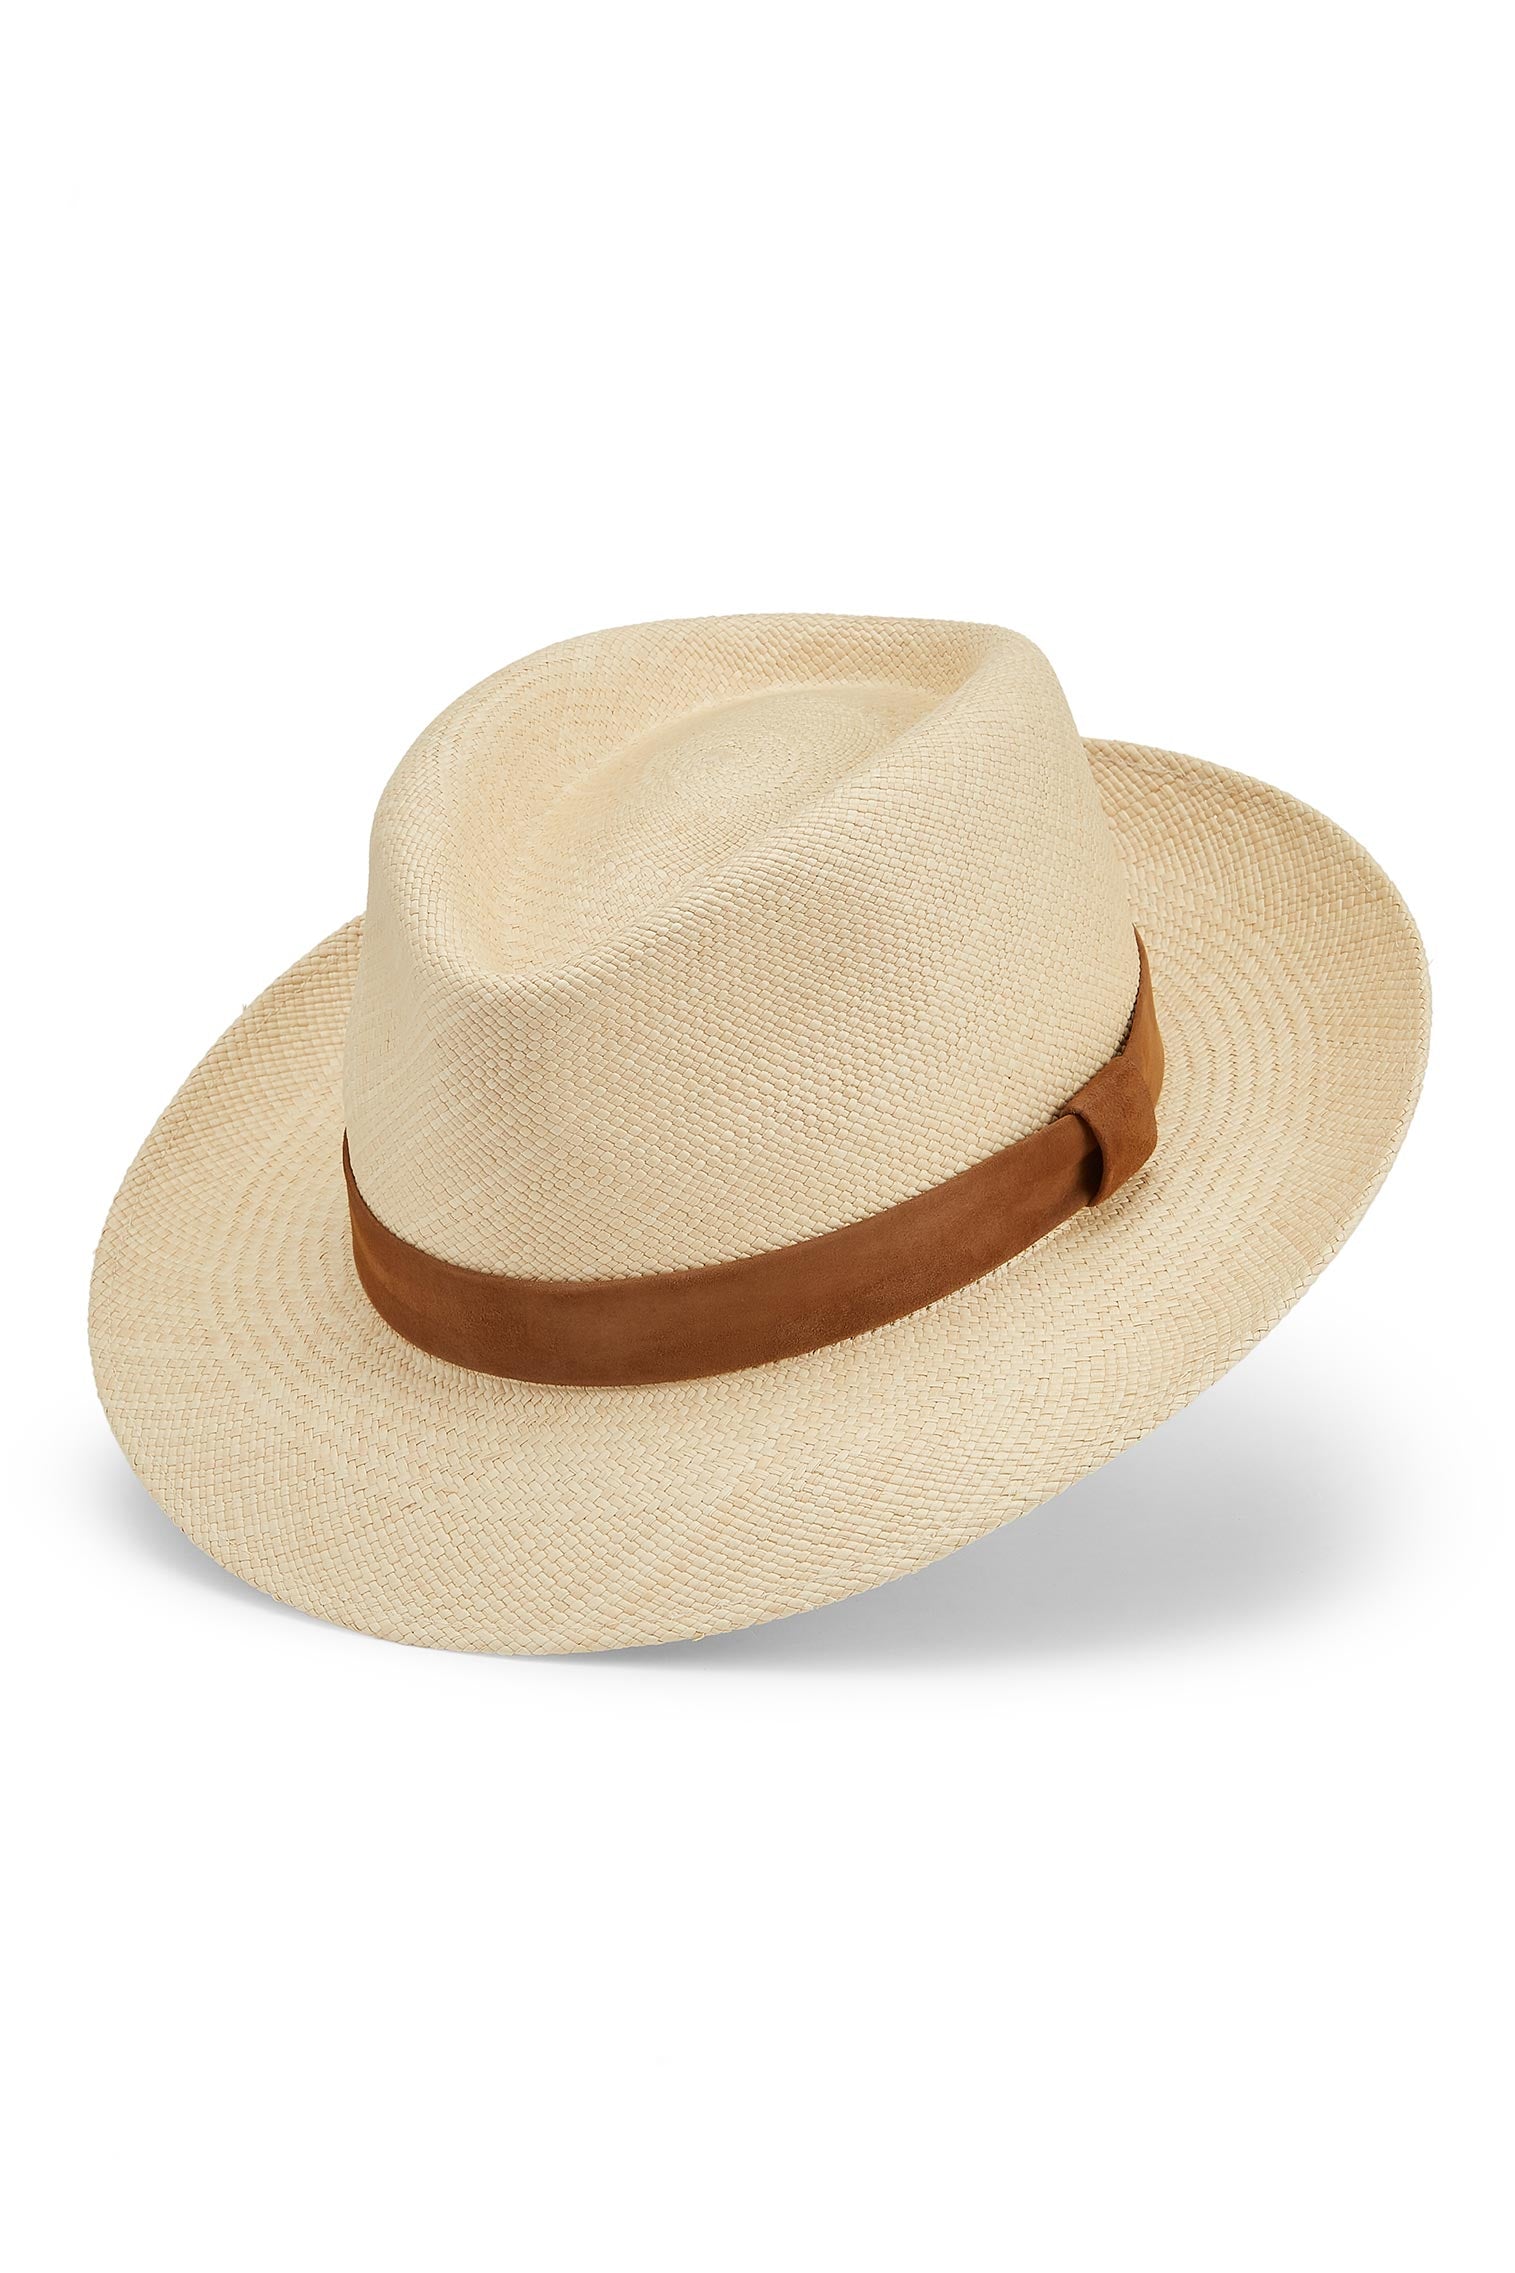 Santa Barbara Panama - Panamas and Sun Hats for Men - Lock & Co. Hatters London UK